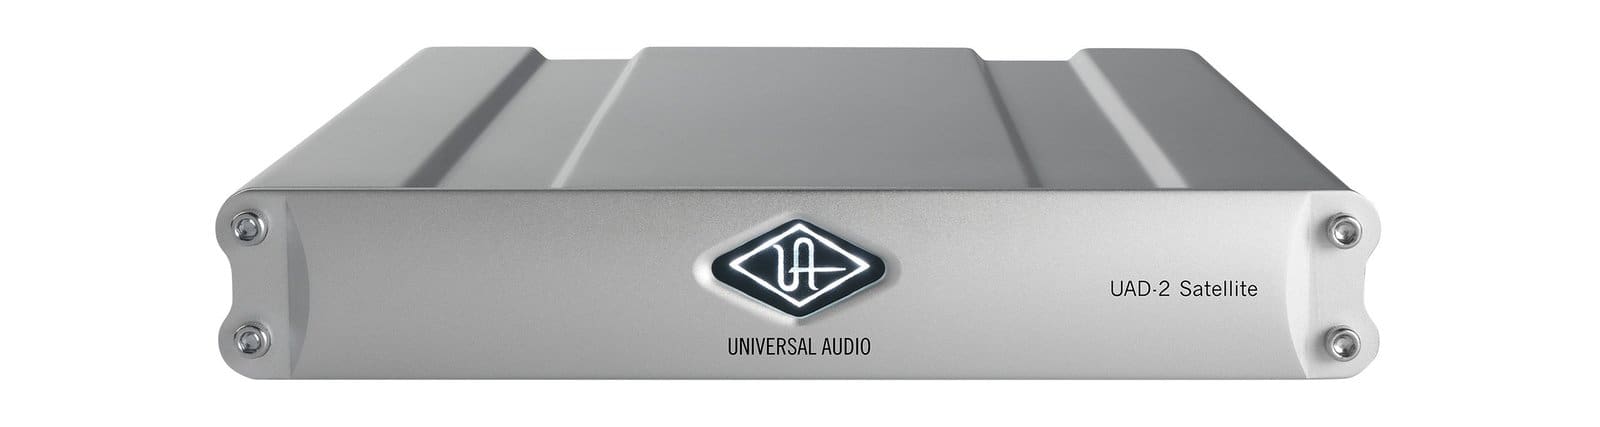 UNIVERSAL AUDIO UAD 2 SAT Firewire quad core